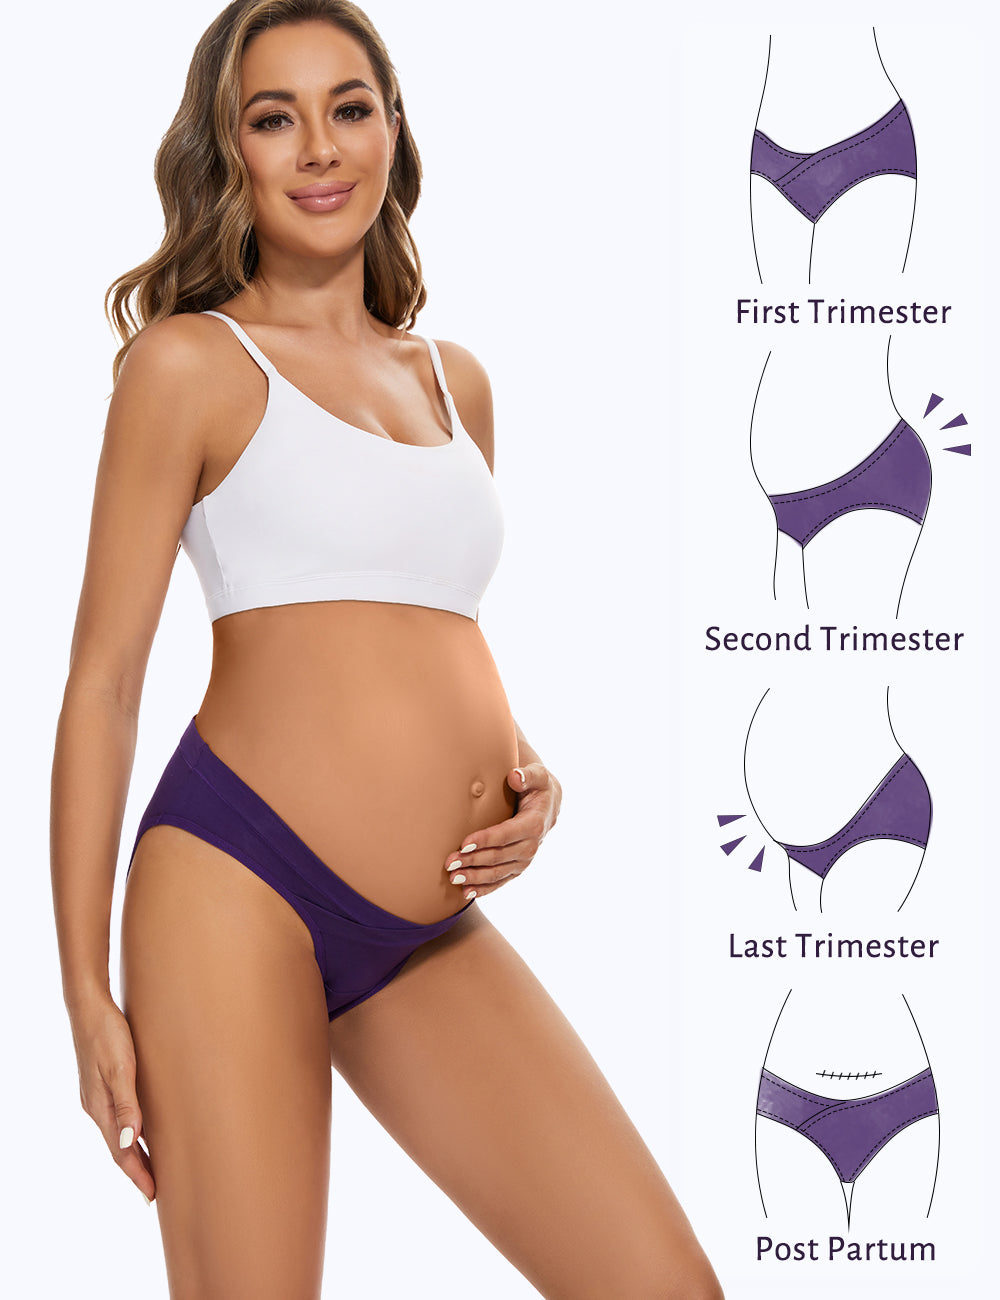 Low Waist Criss-Cross Cotton Women Pregnancy Panties Under The Bump  Postpartum Briefs Maternity Underwear